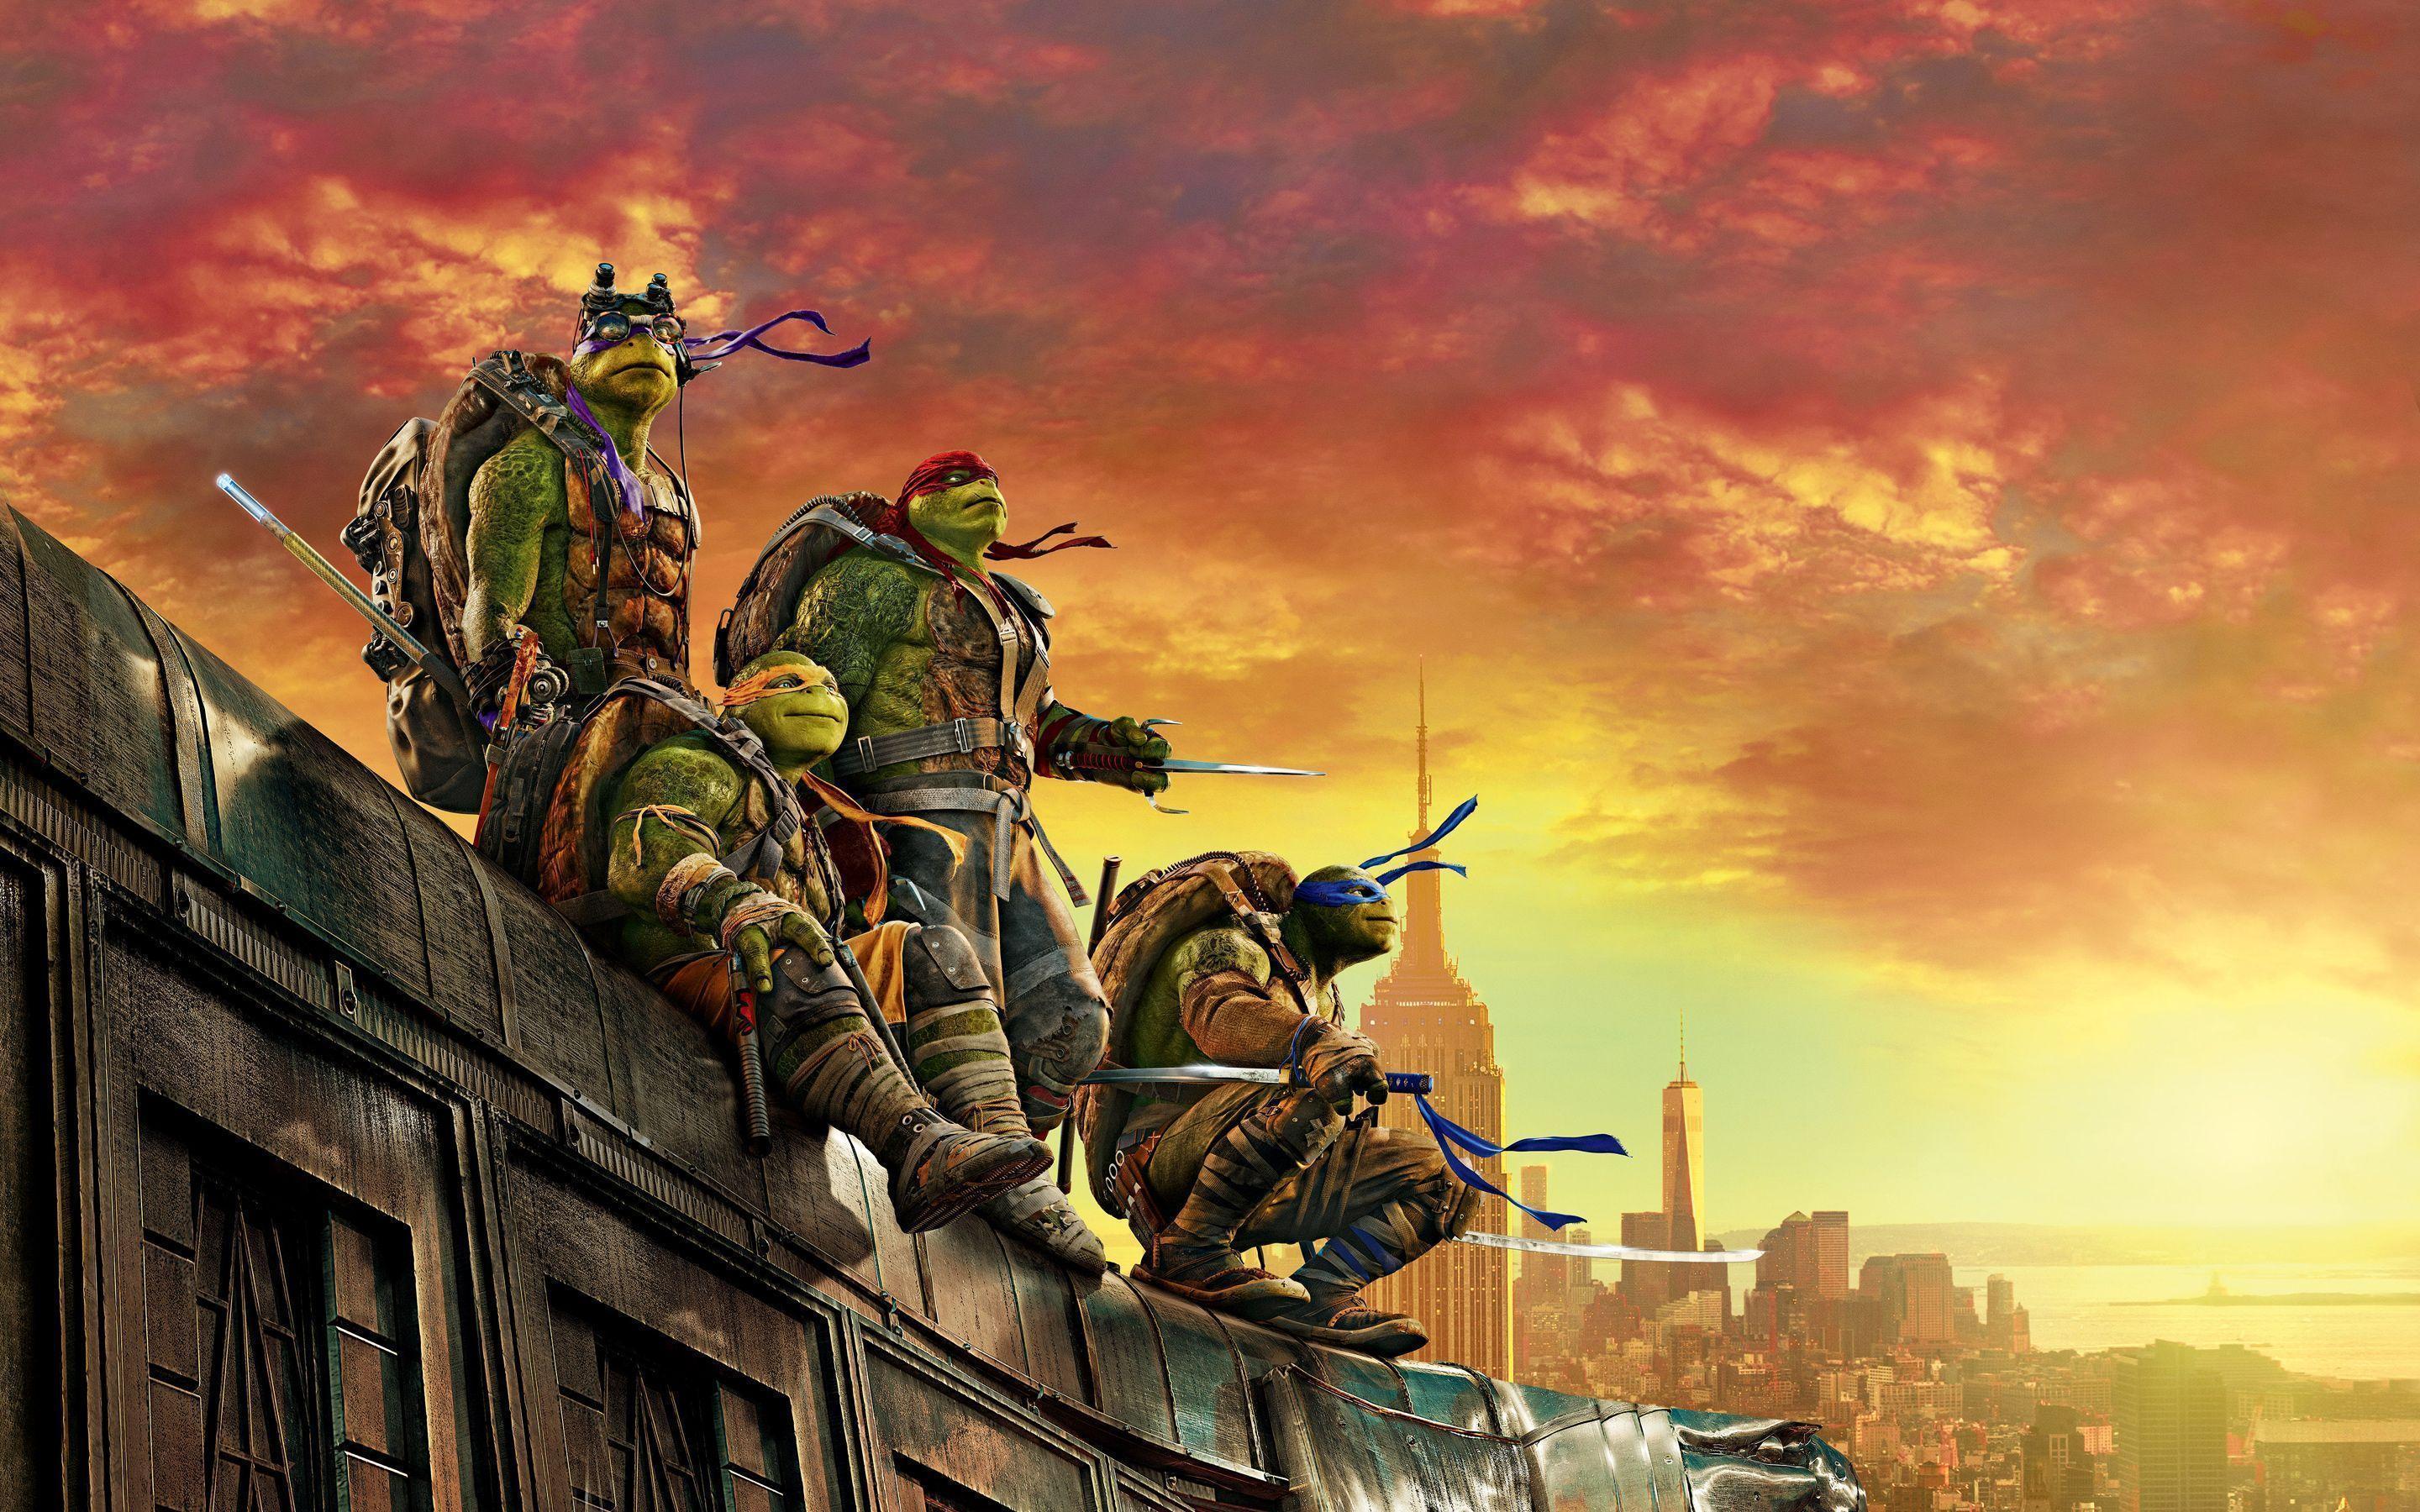 Teenage Mutant Ninja Turtles 2017 Wallpapers - Wallpaper Cave